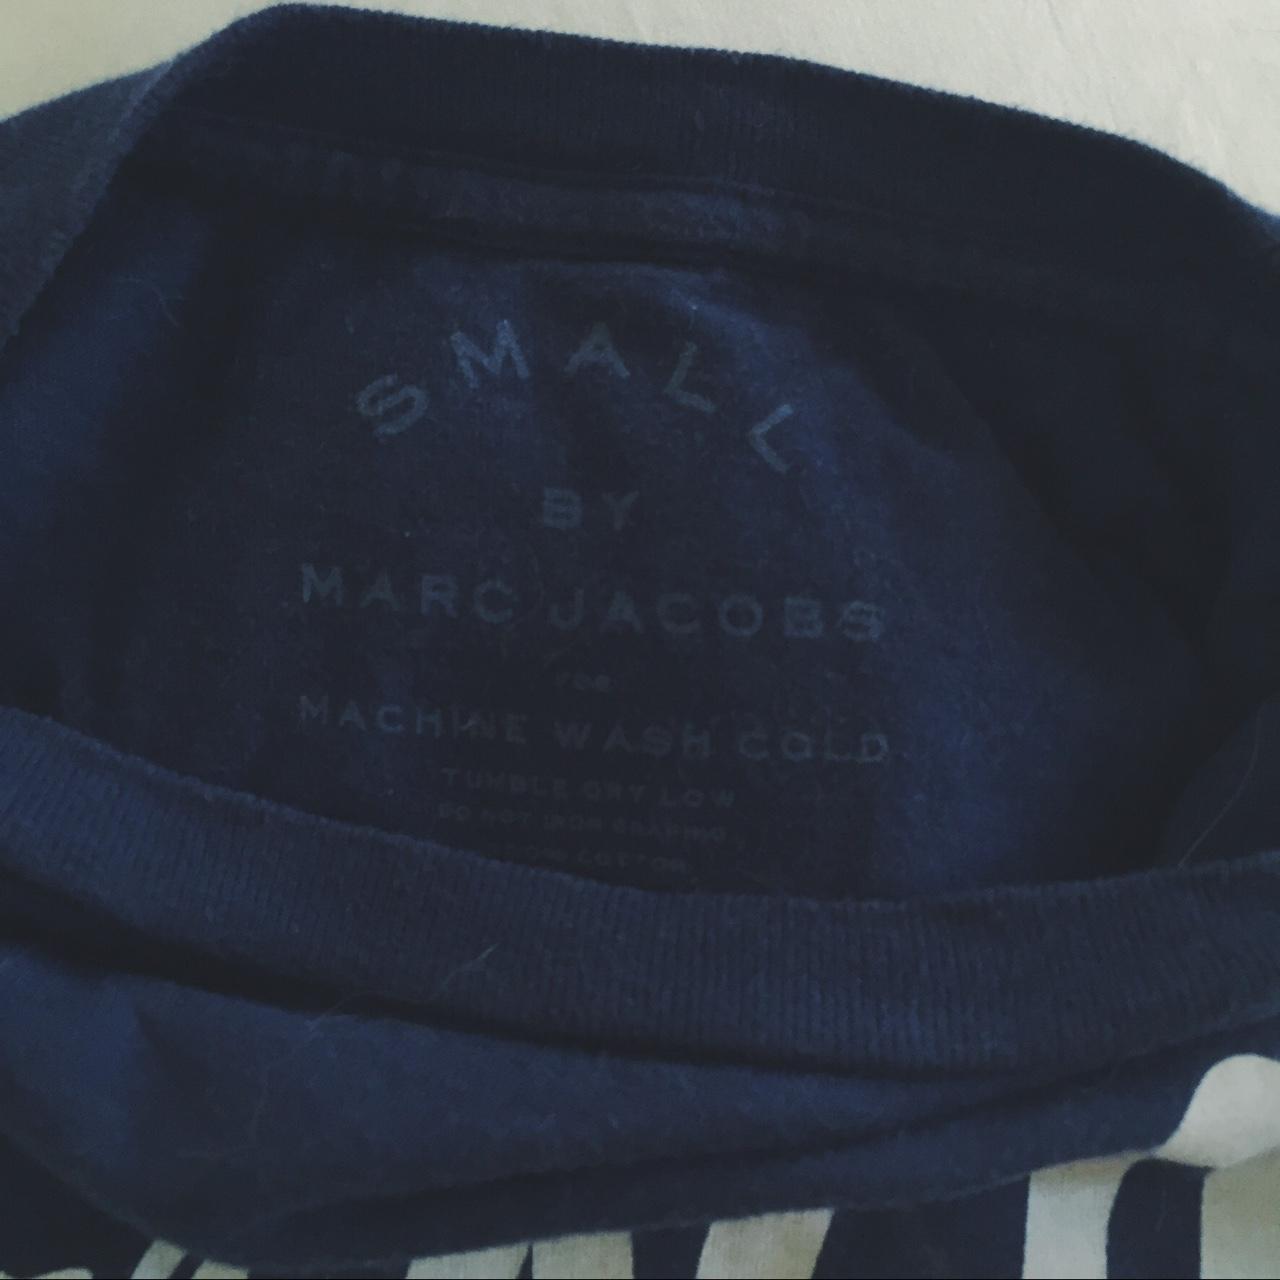 Marc by Marc Jacobs Men's Navy T-shirt (3)